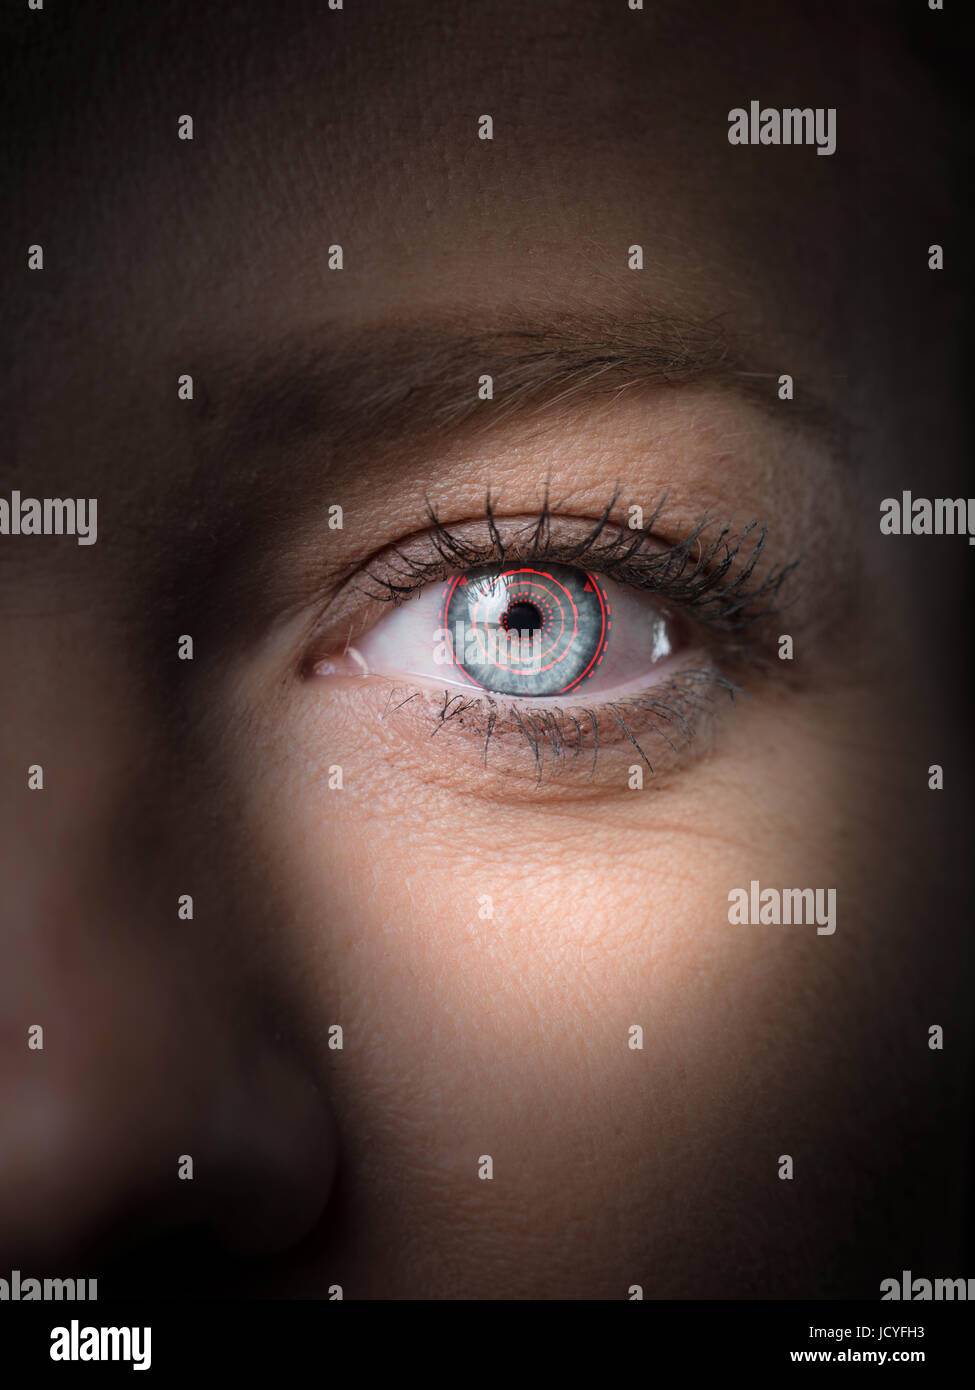 biometric retina security scan Stock Photo